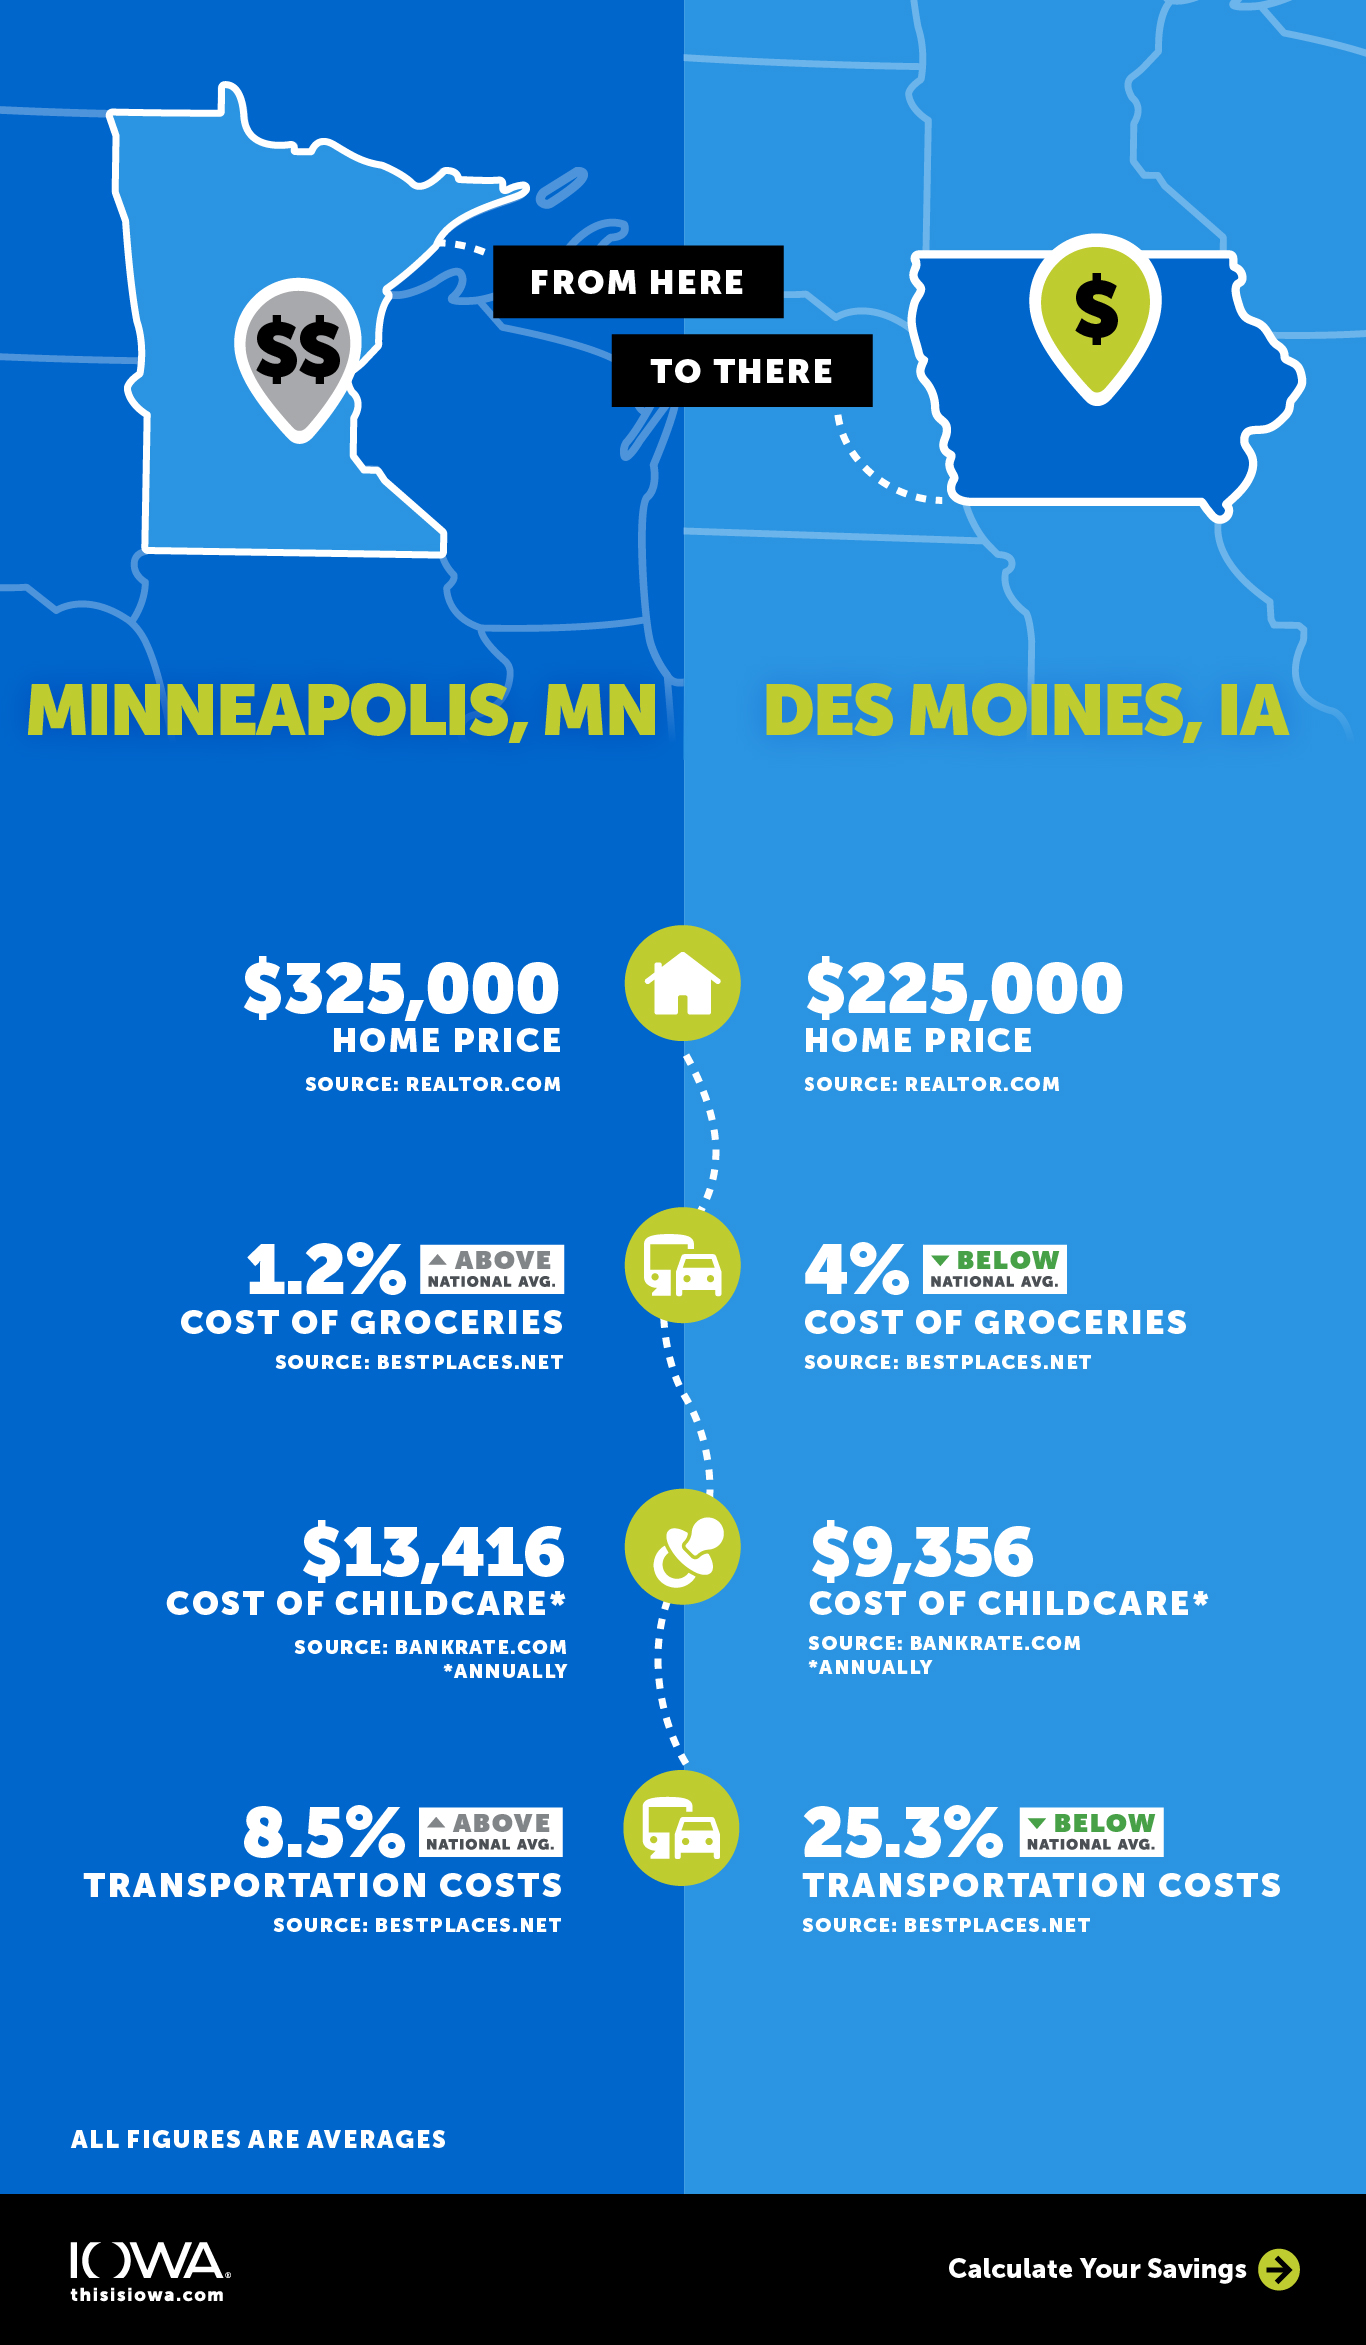 Living costs comparing Portland, Oregan to Davenport, Iowa